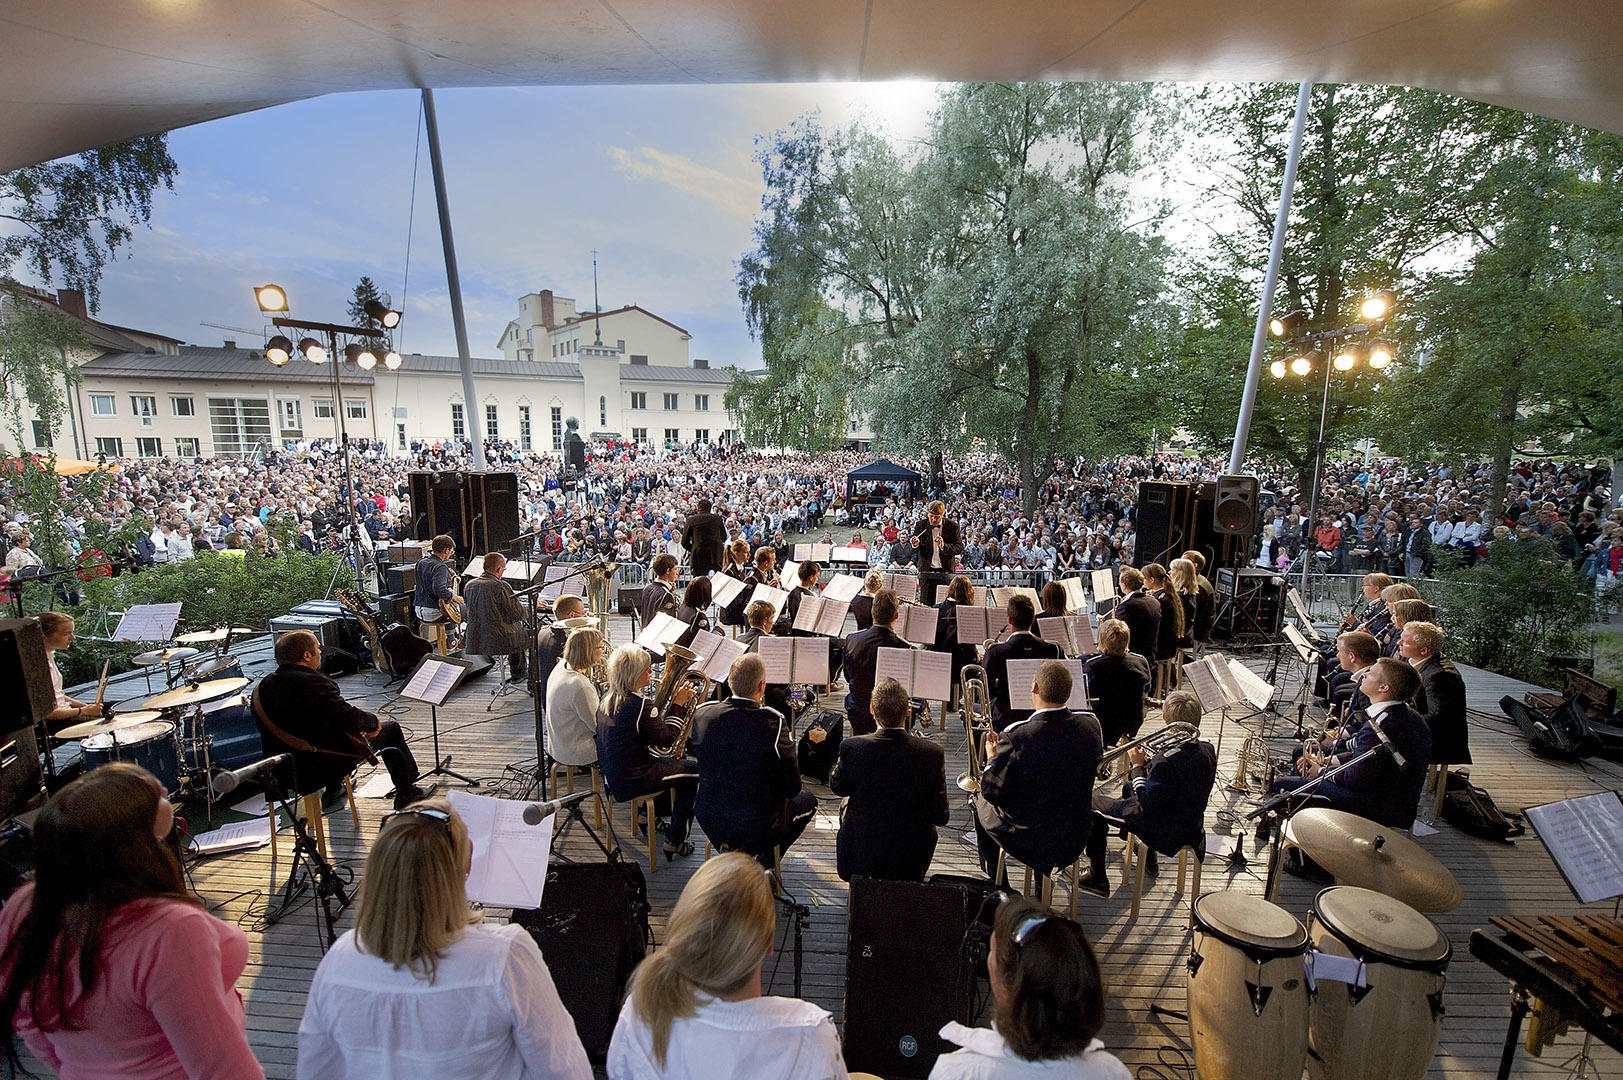 2_Visit Pietarsaari Seutu_2_Concert in the park_Image credit_ Nicklas Storbjörk